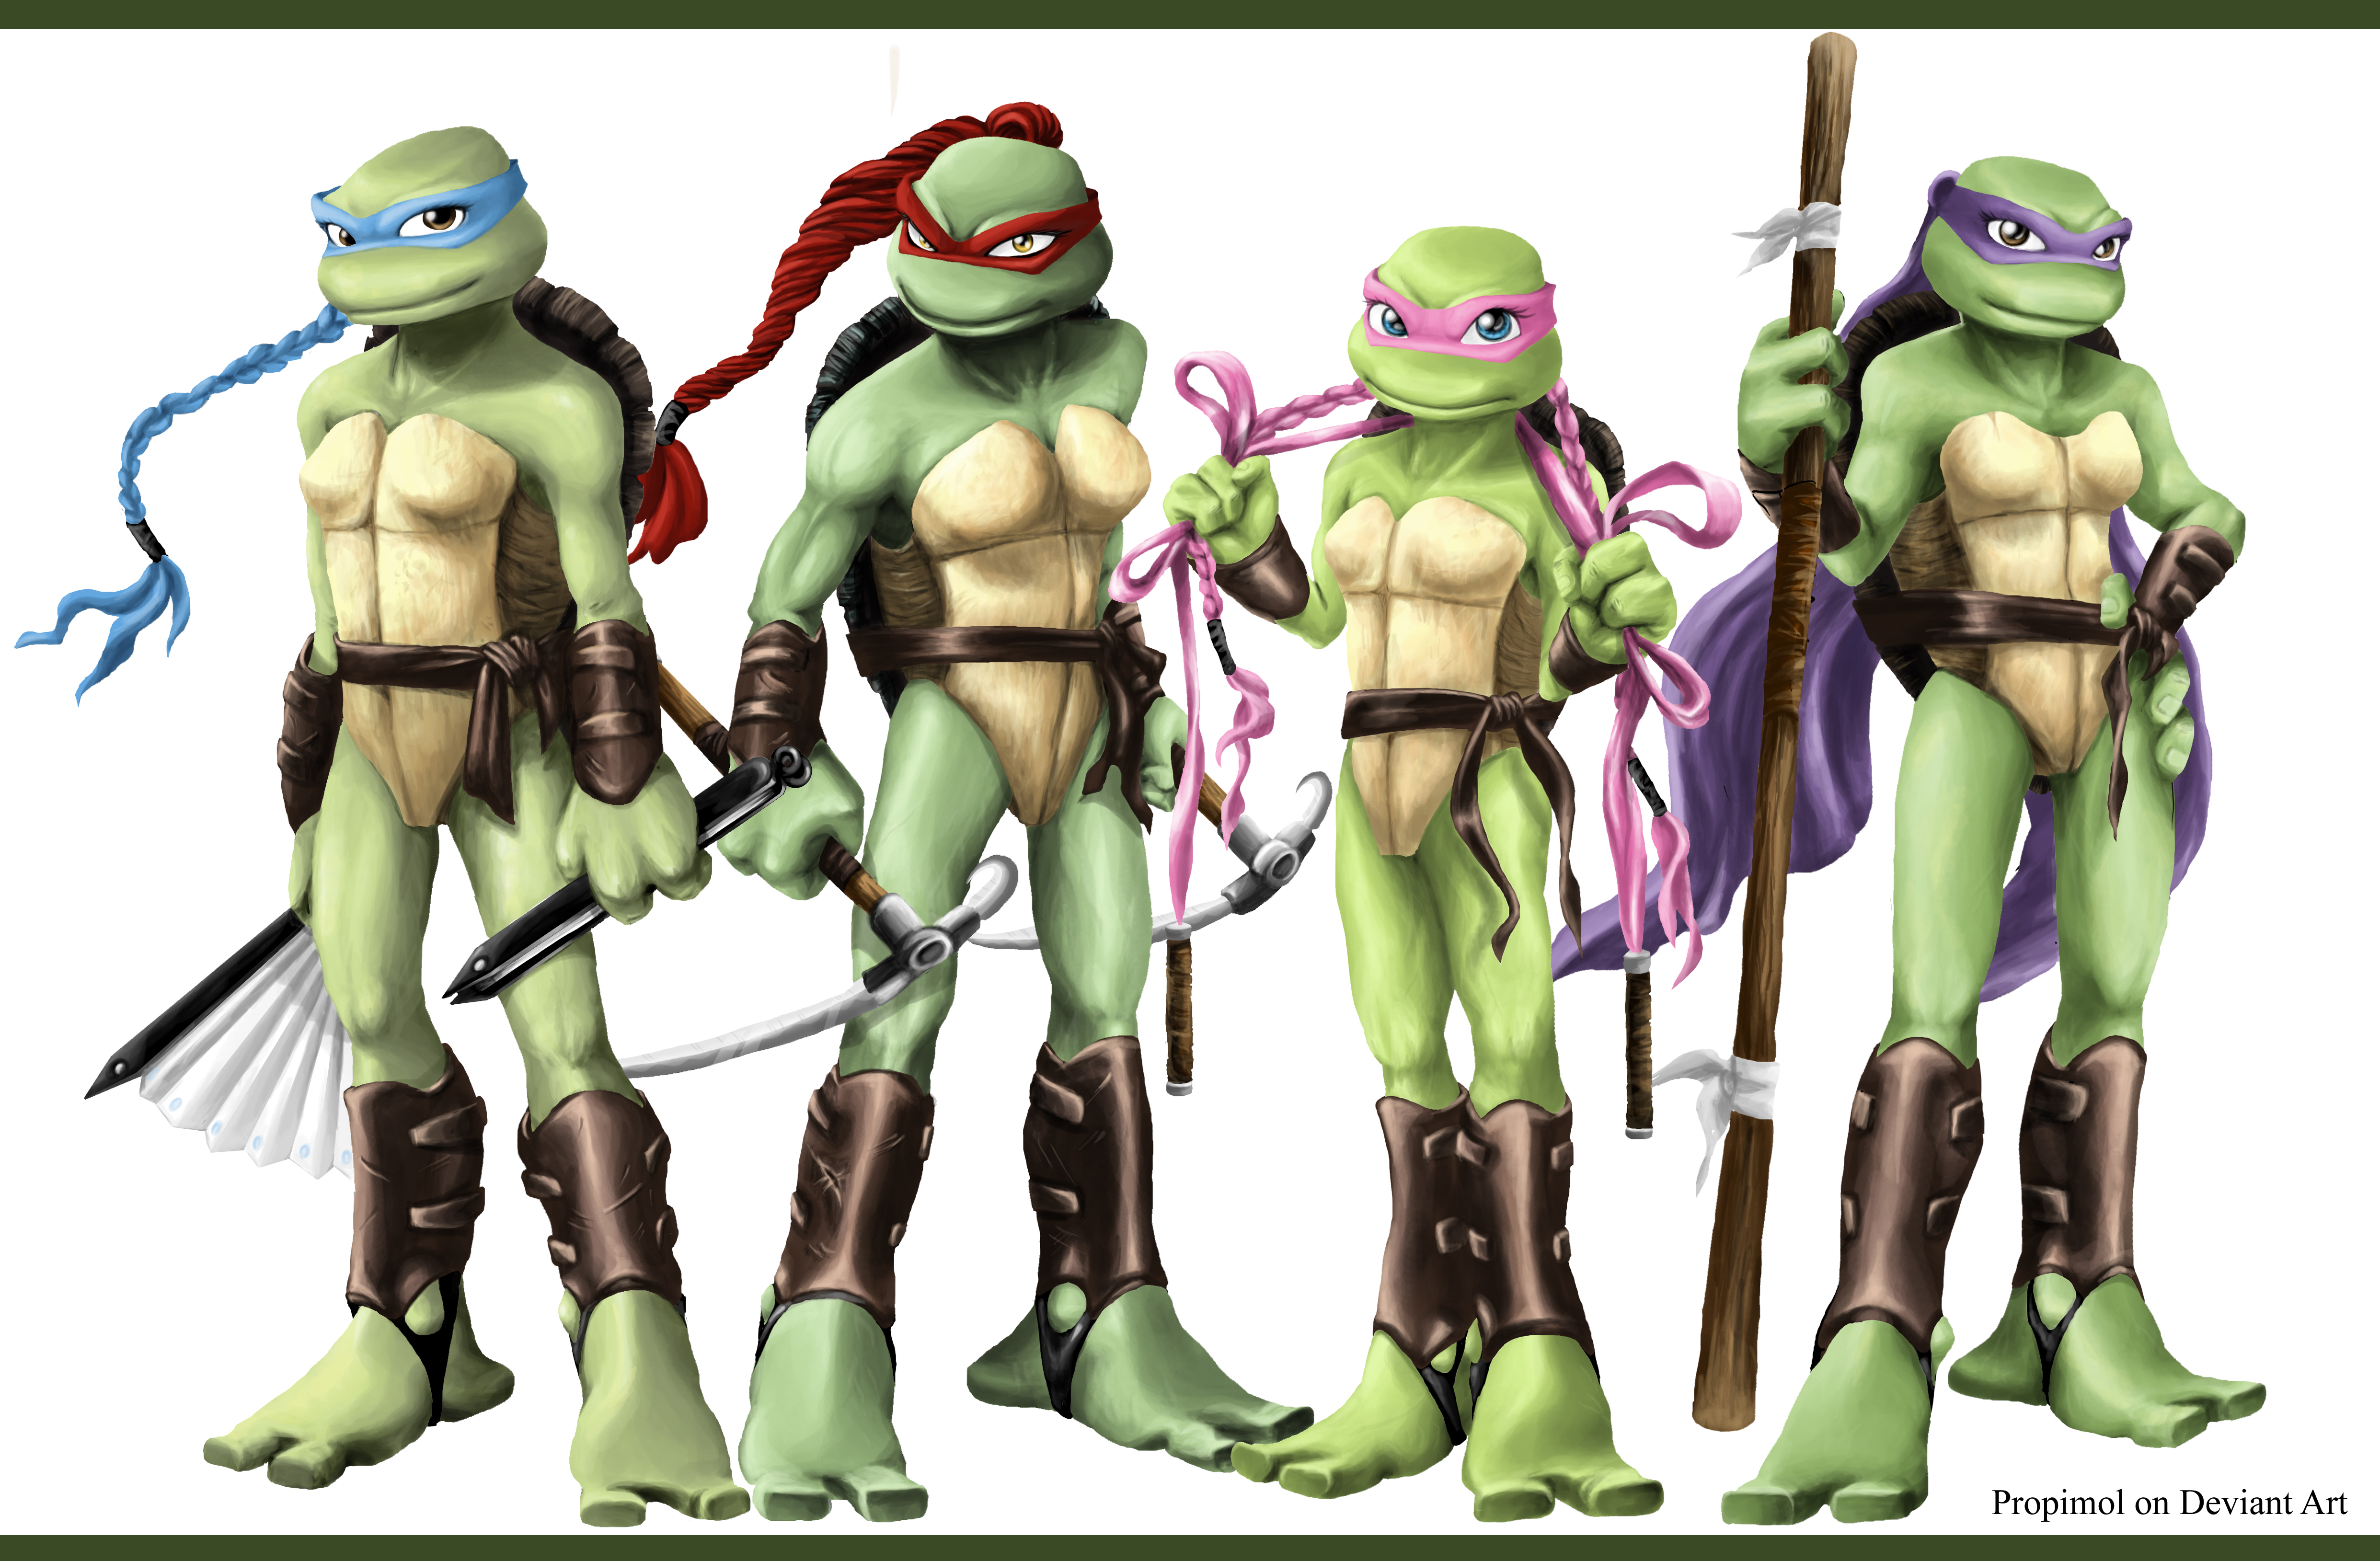 https://static.wikia.nocookie.net/teenage-mutant-ninja-turtles-fanon/images/6/66/TMNT_Girls_Team.jpg/revision/latest?cb=20170819192943